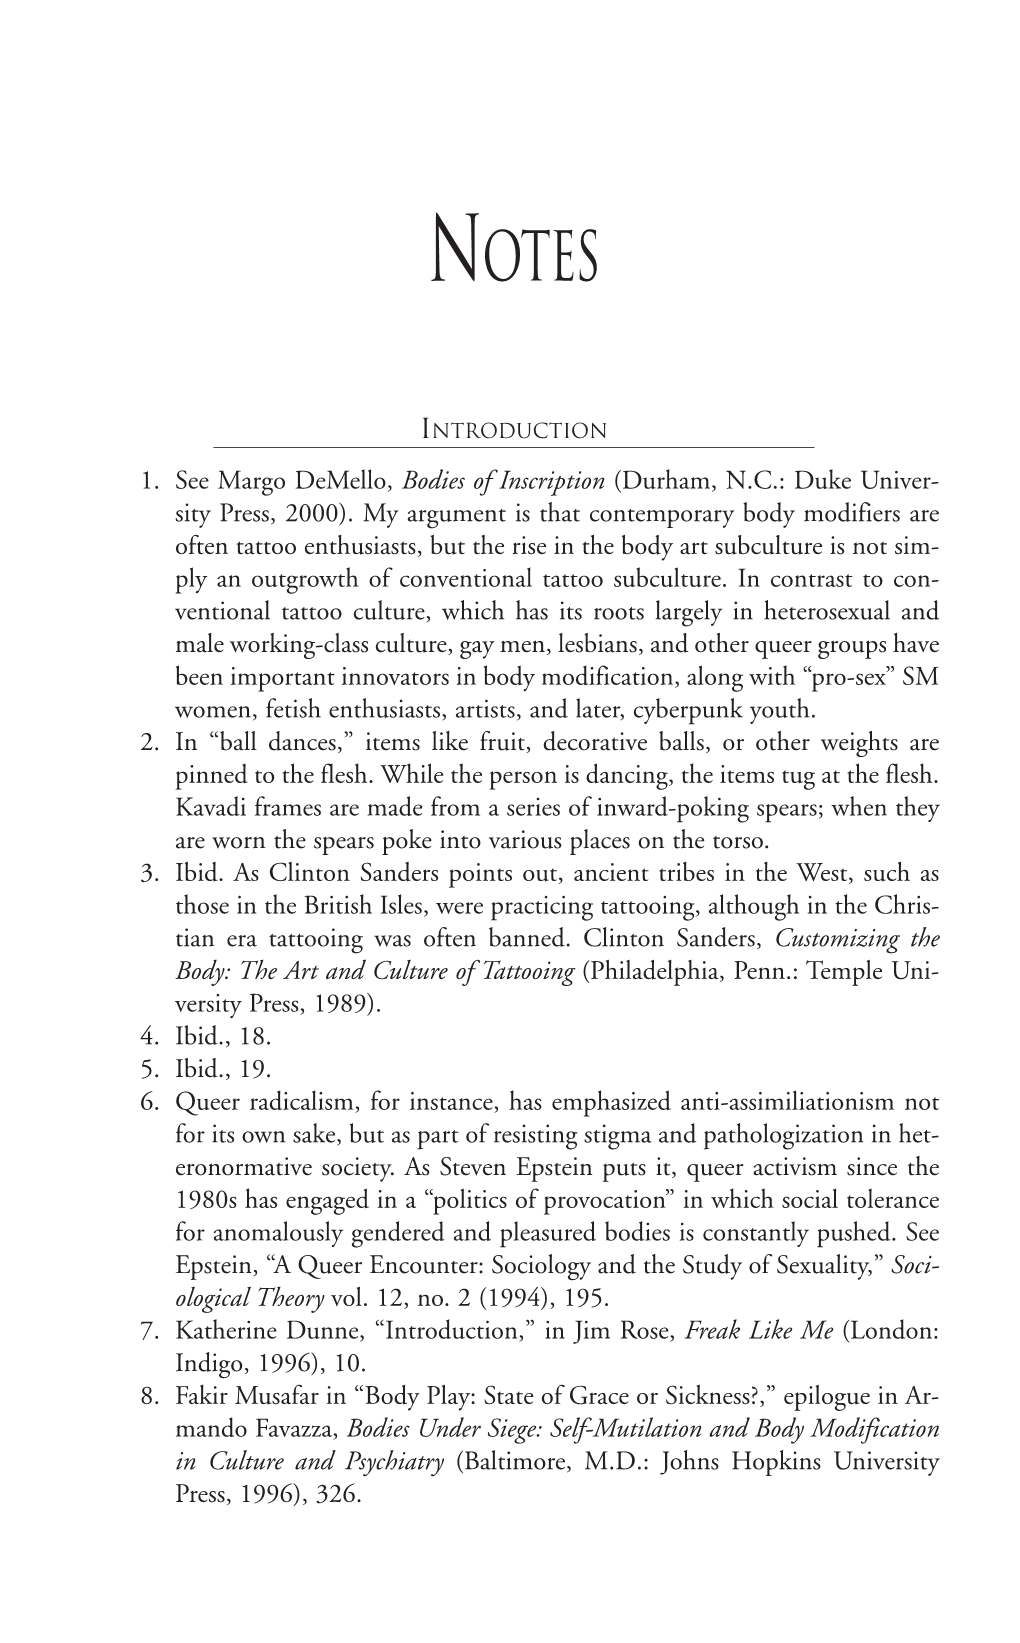 1. See Margo Demello, Bodies of Inscription (Durham, N.C.: Duke Univer- Sity Press, 2000)